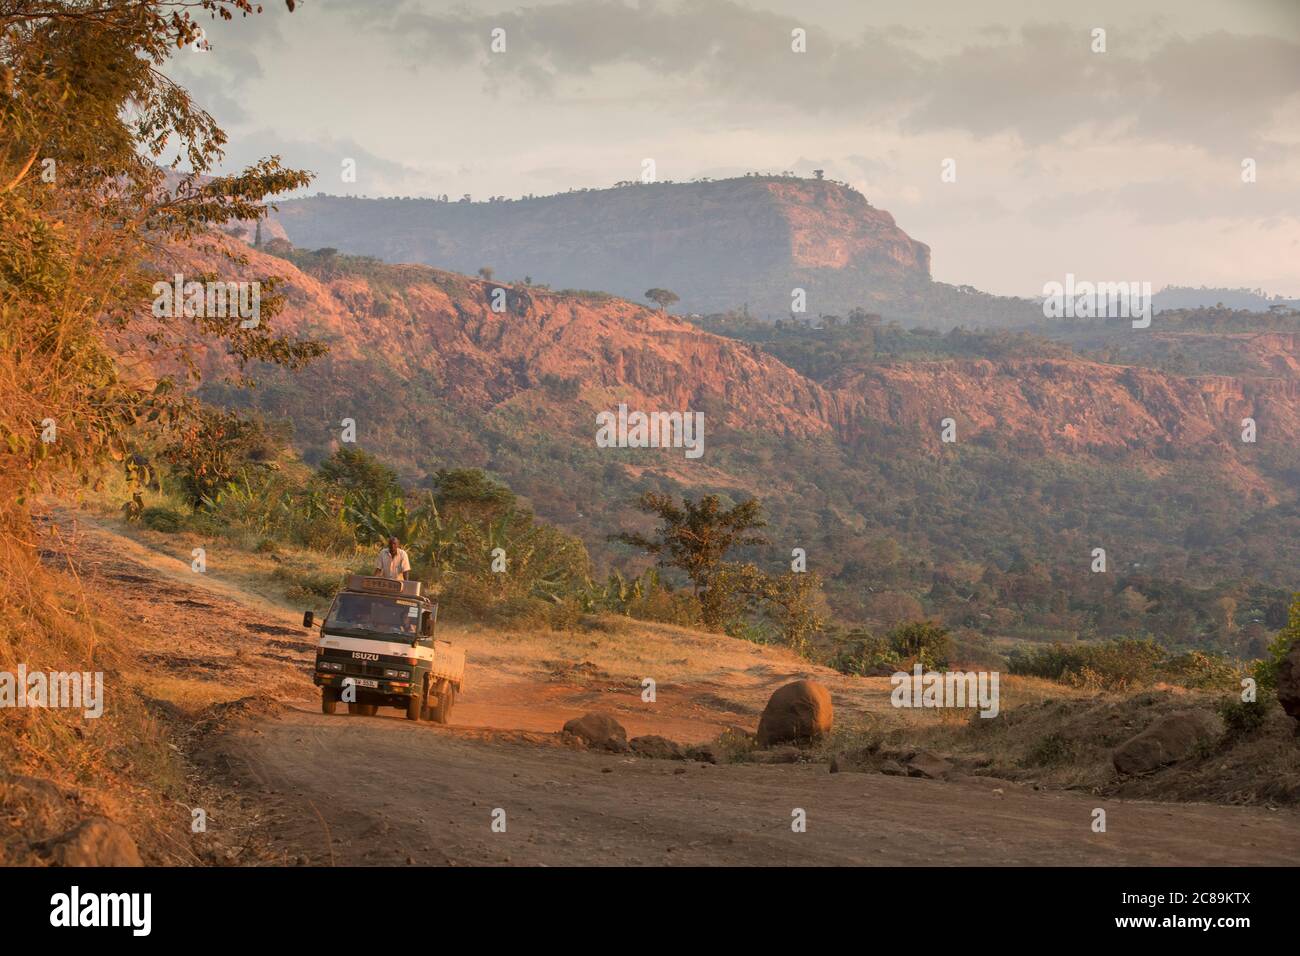 Trucks navigate steep Mt.Elgon mountain roads while passing through beautiful scenery in Bulambuli Dist., Uganda, Africa. Stock Photo